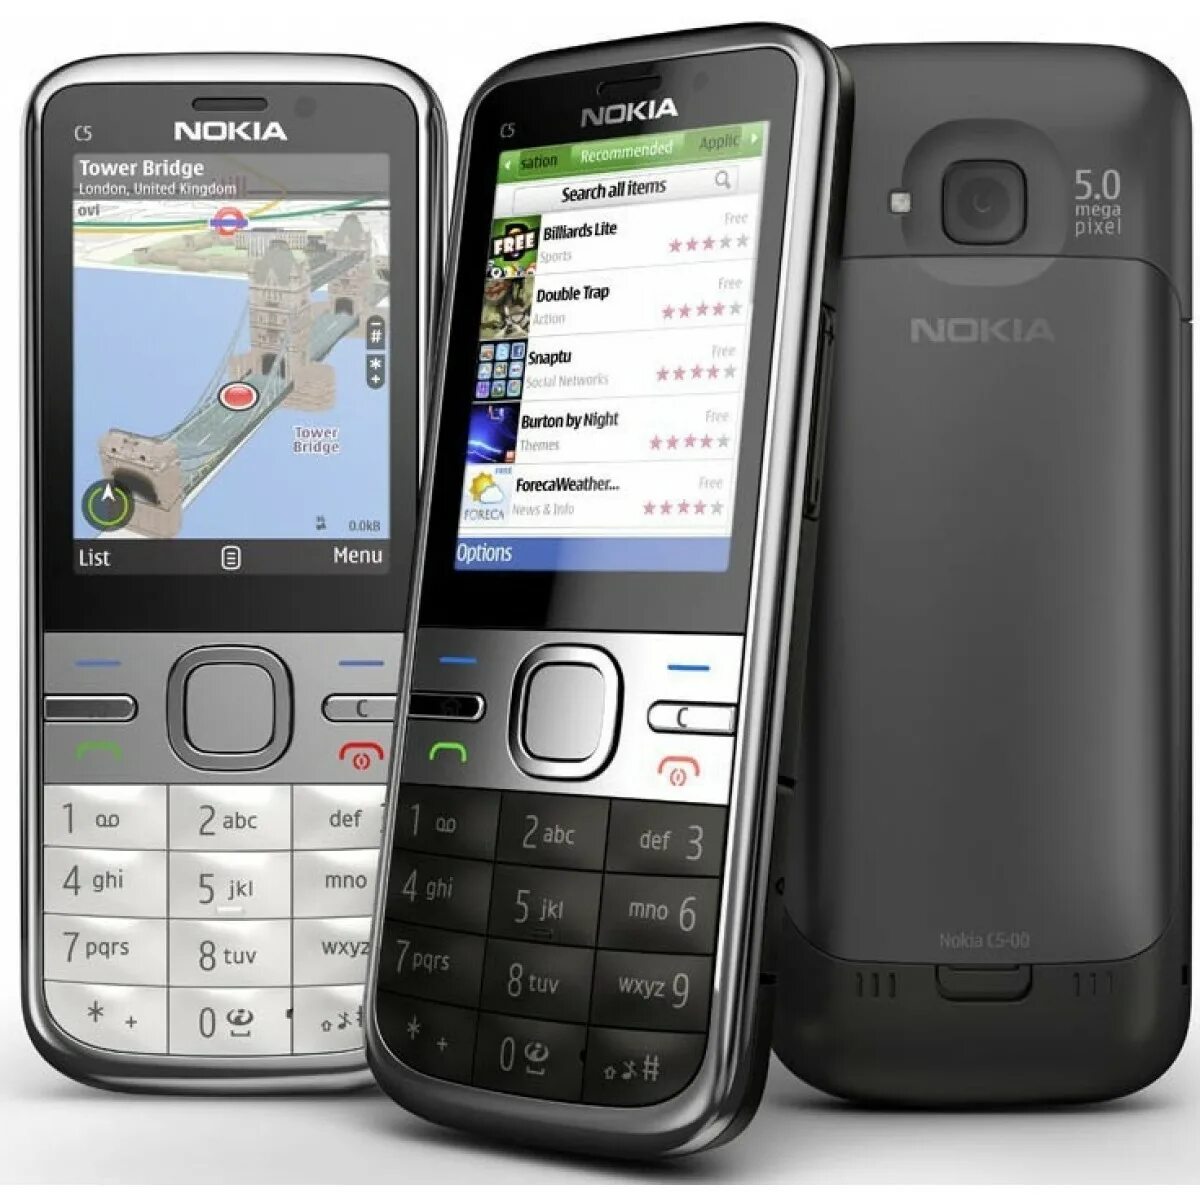 Картинка телефона нокиа. Нокиа c5 00. Nokia c5-00 RM-645. Nokia c5-01. Nokia c5-00.2.